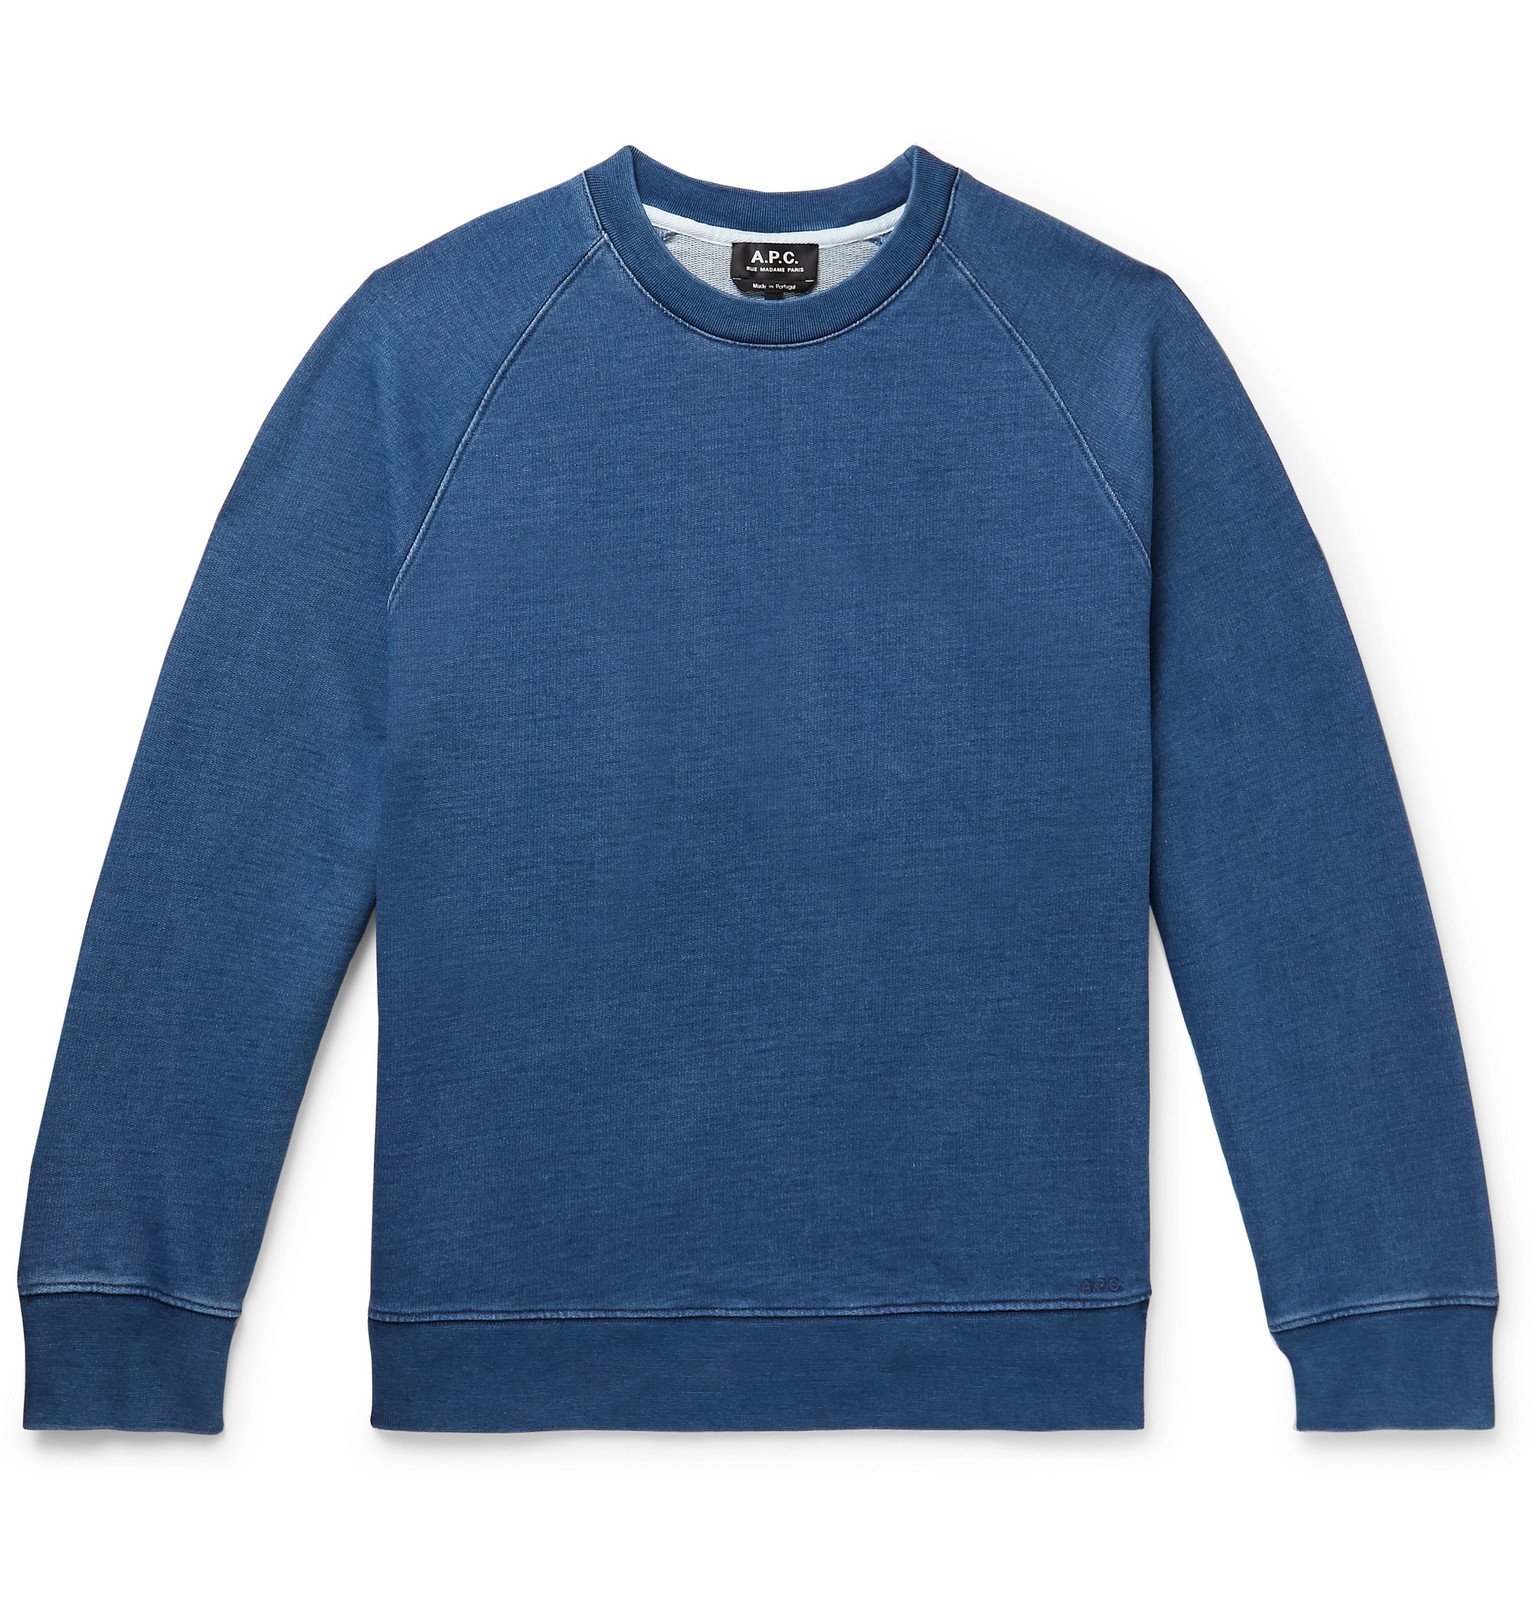 A.P.C. - Robert Indigo-Dyed Loopback Cotton-Jersey Sweatshirt - Blue A.P.C.